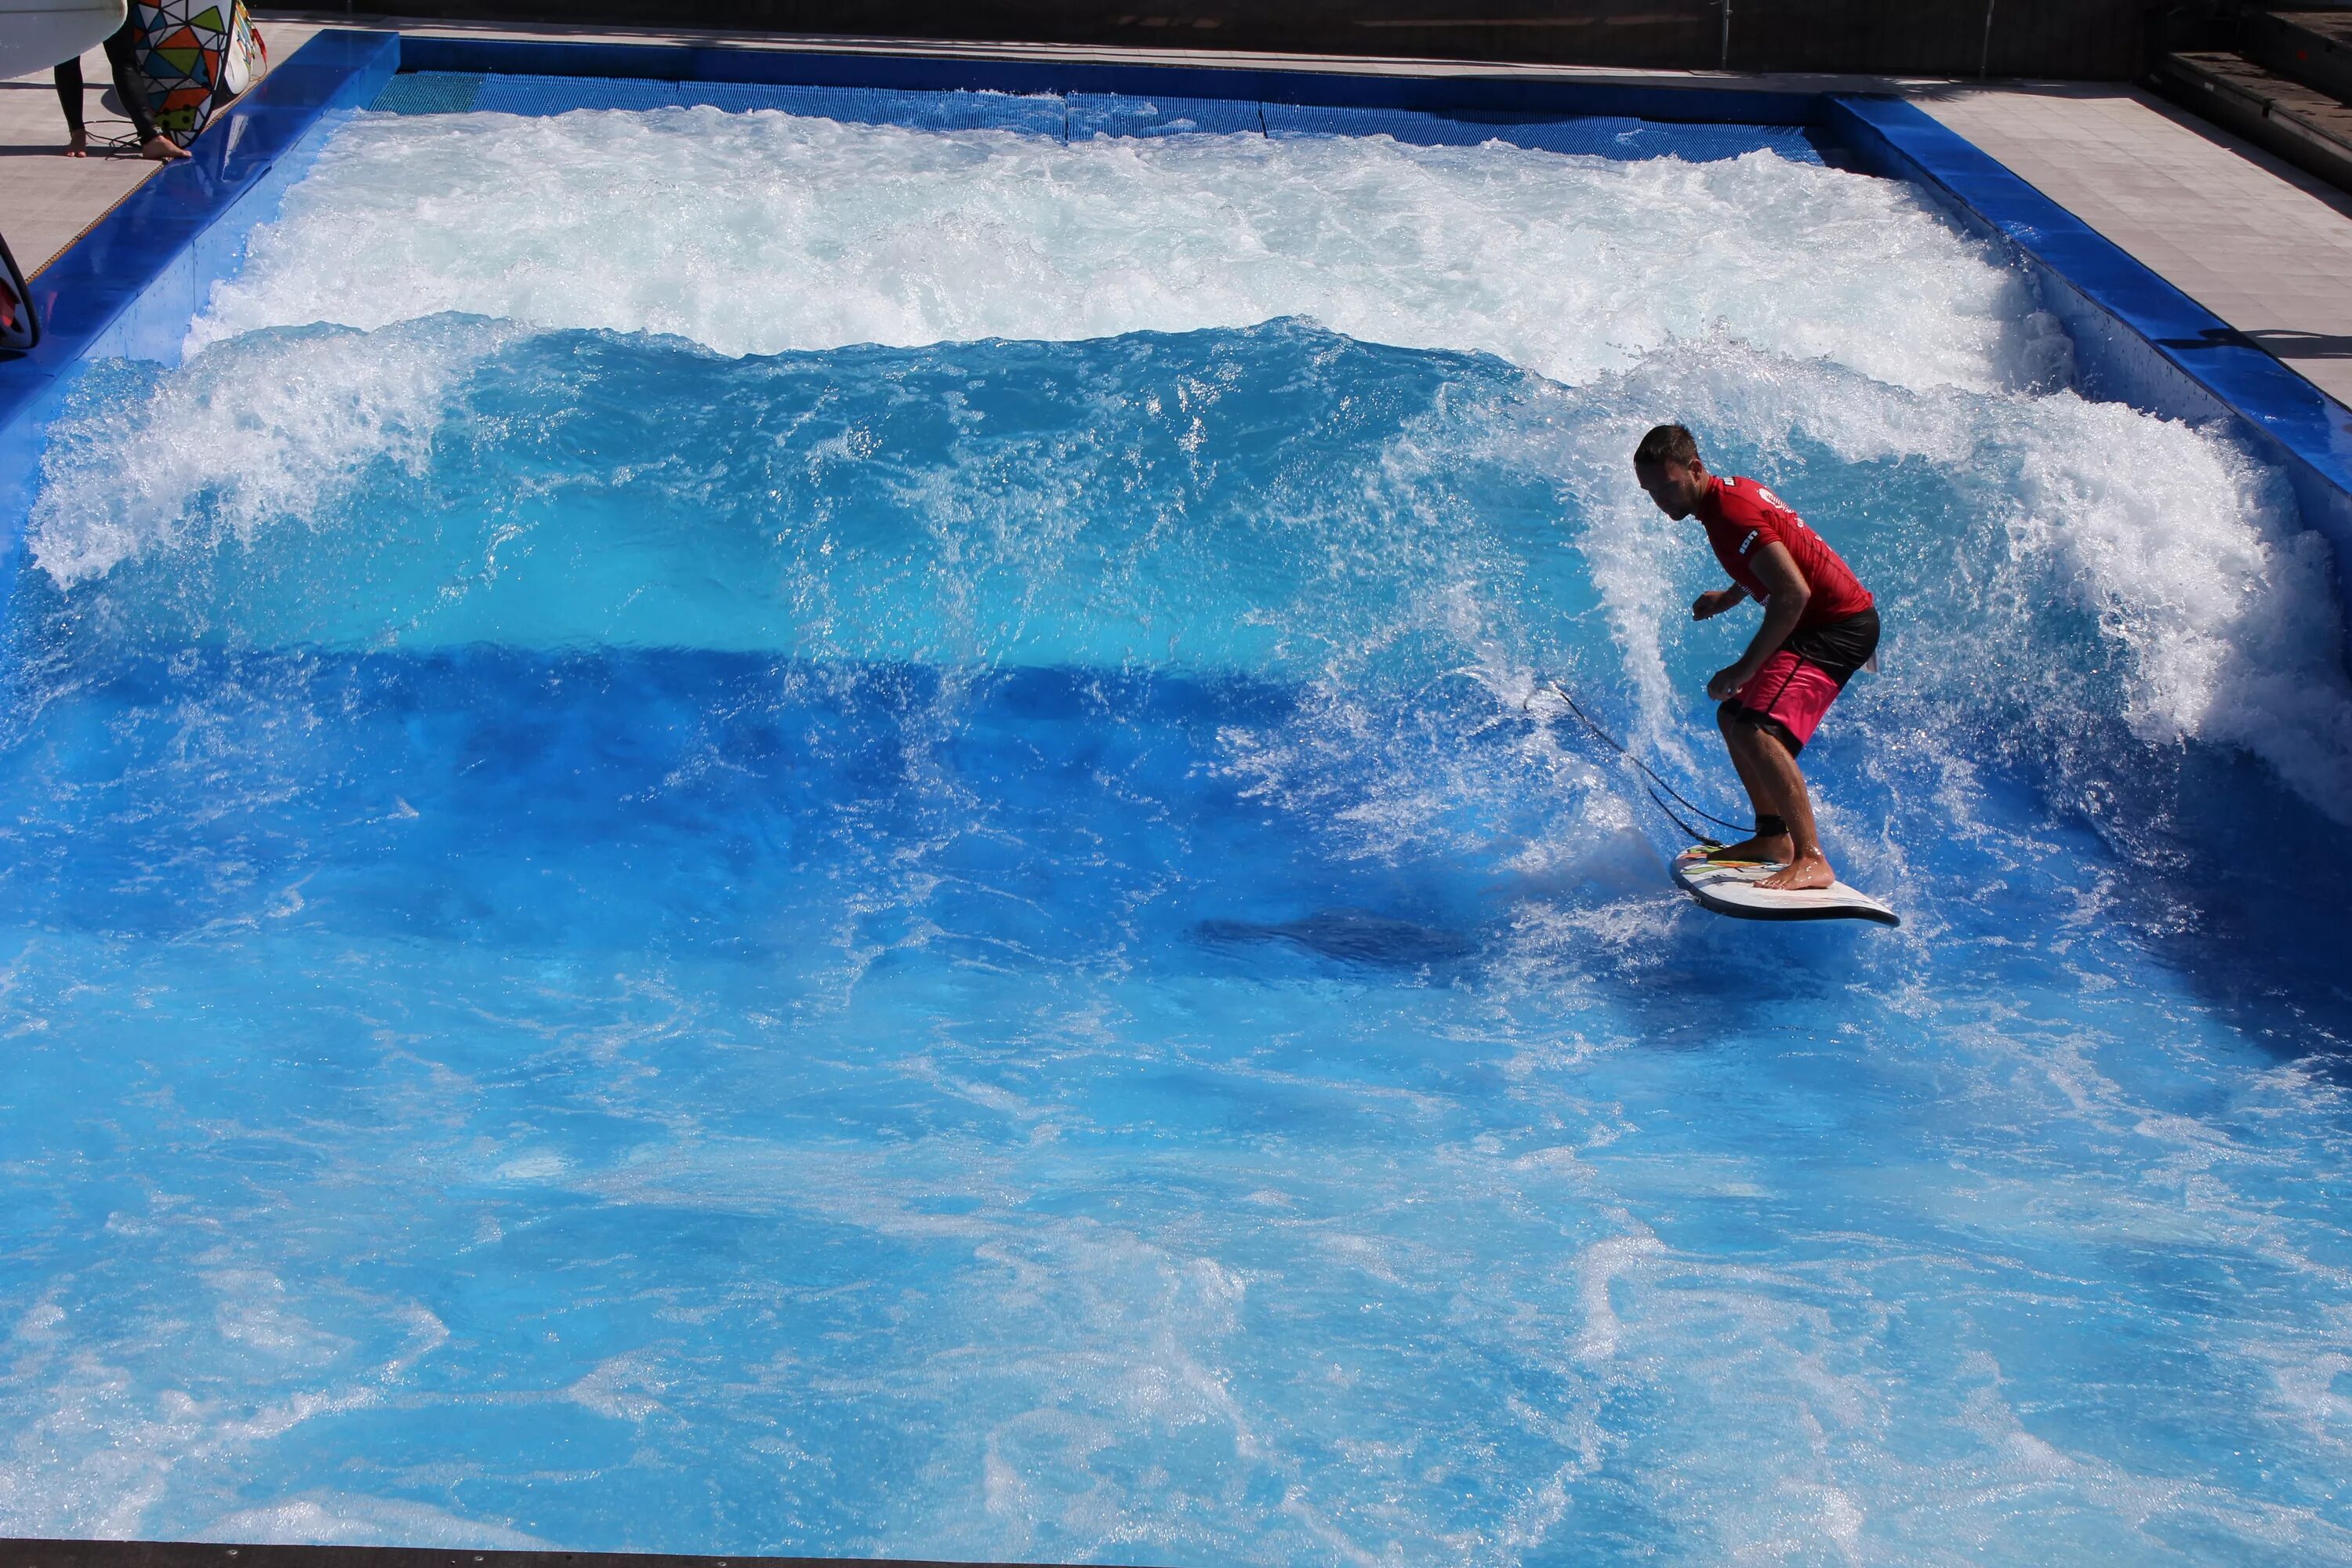 Искусственная волна цена. Аквапарк Питерлэнд серфинг. Искусственная волна. Искусственная волна для серфинга. Бассейн с искусственной волной.